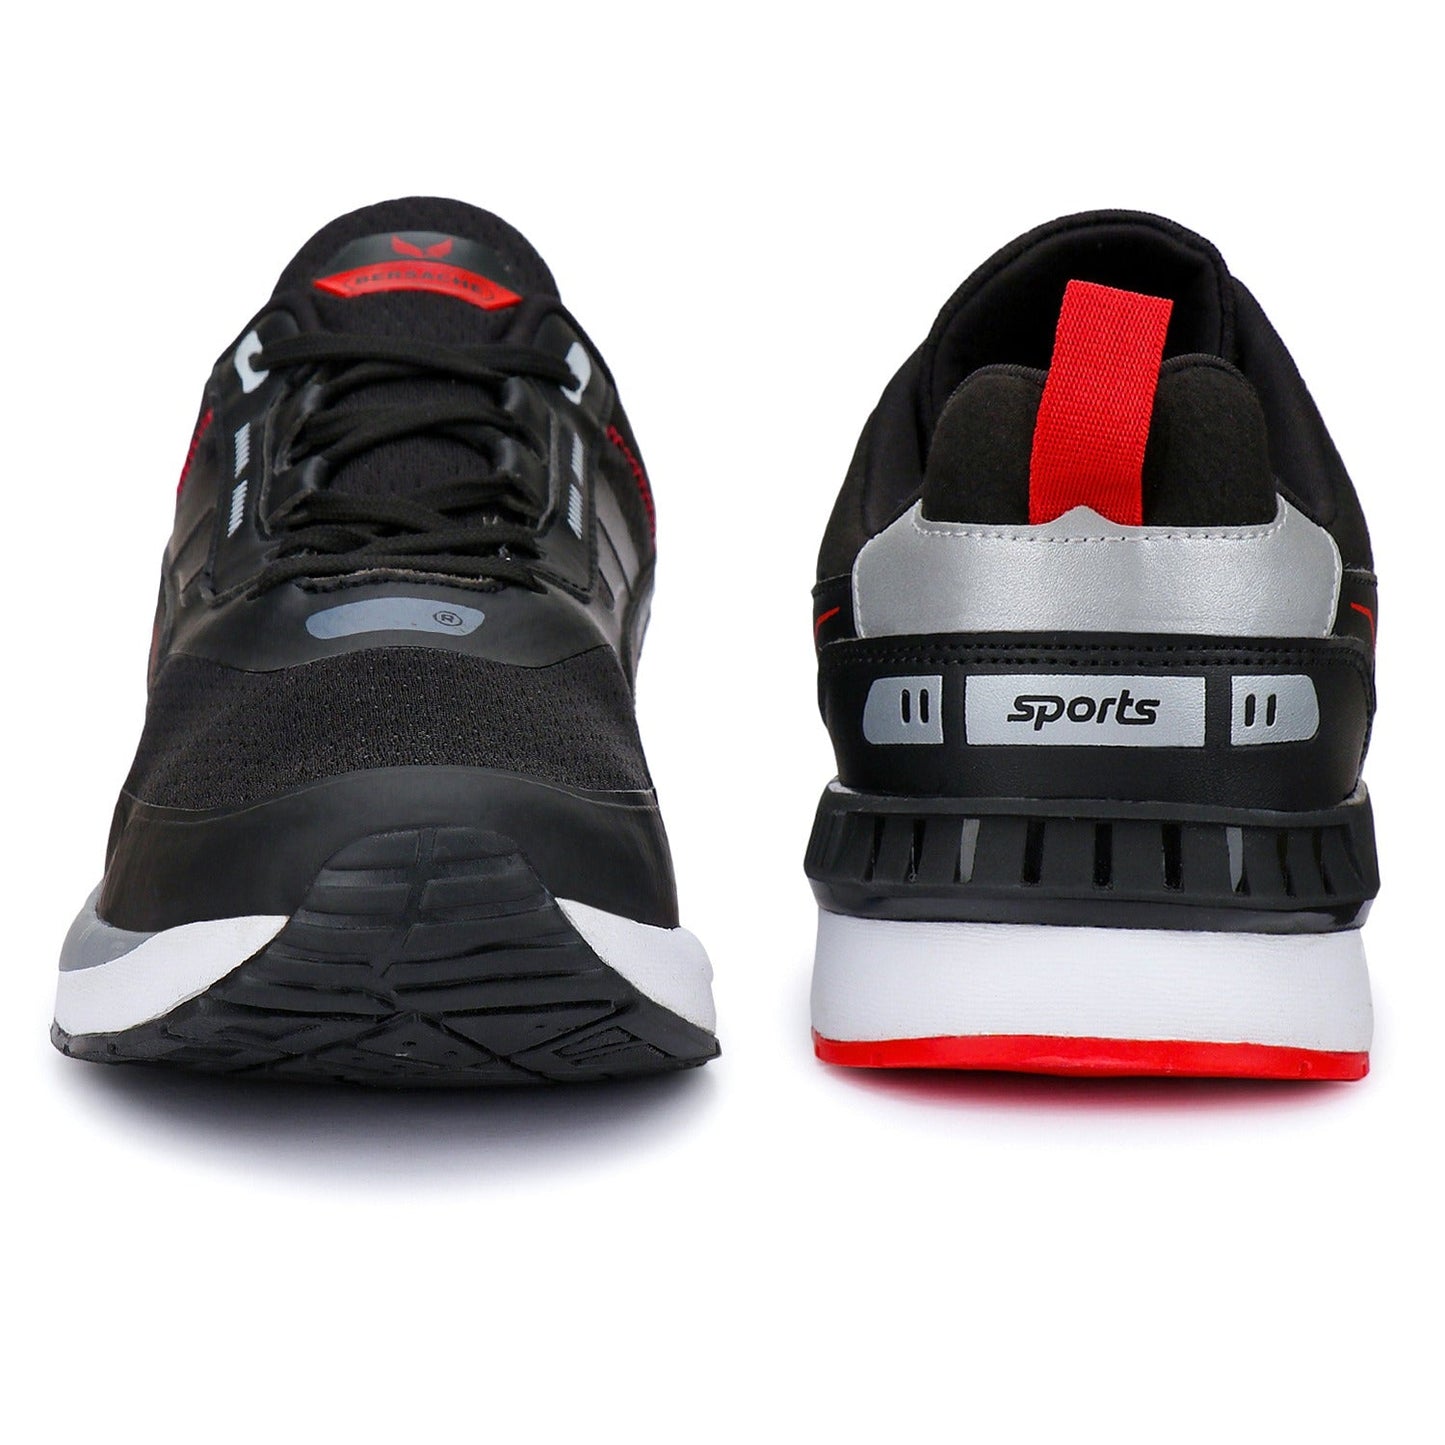 Bersache Lightweight Casual Sneaker Loafer Walking Shoes For Men9081-Black